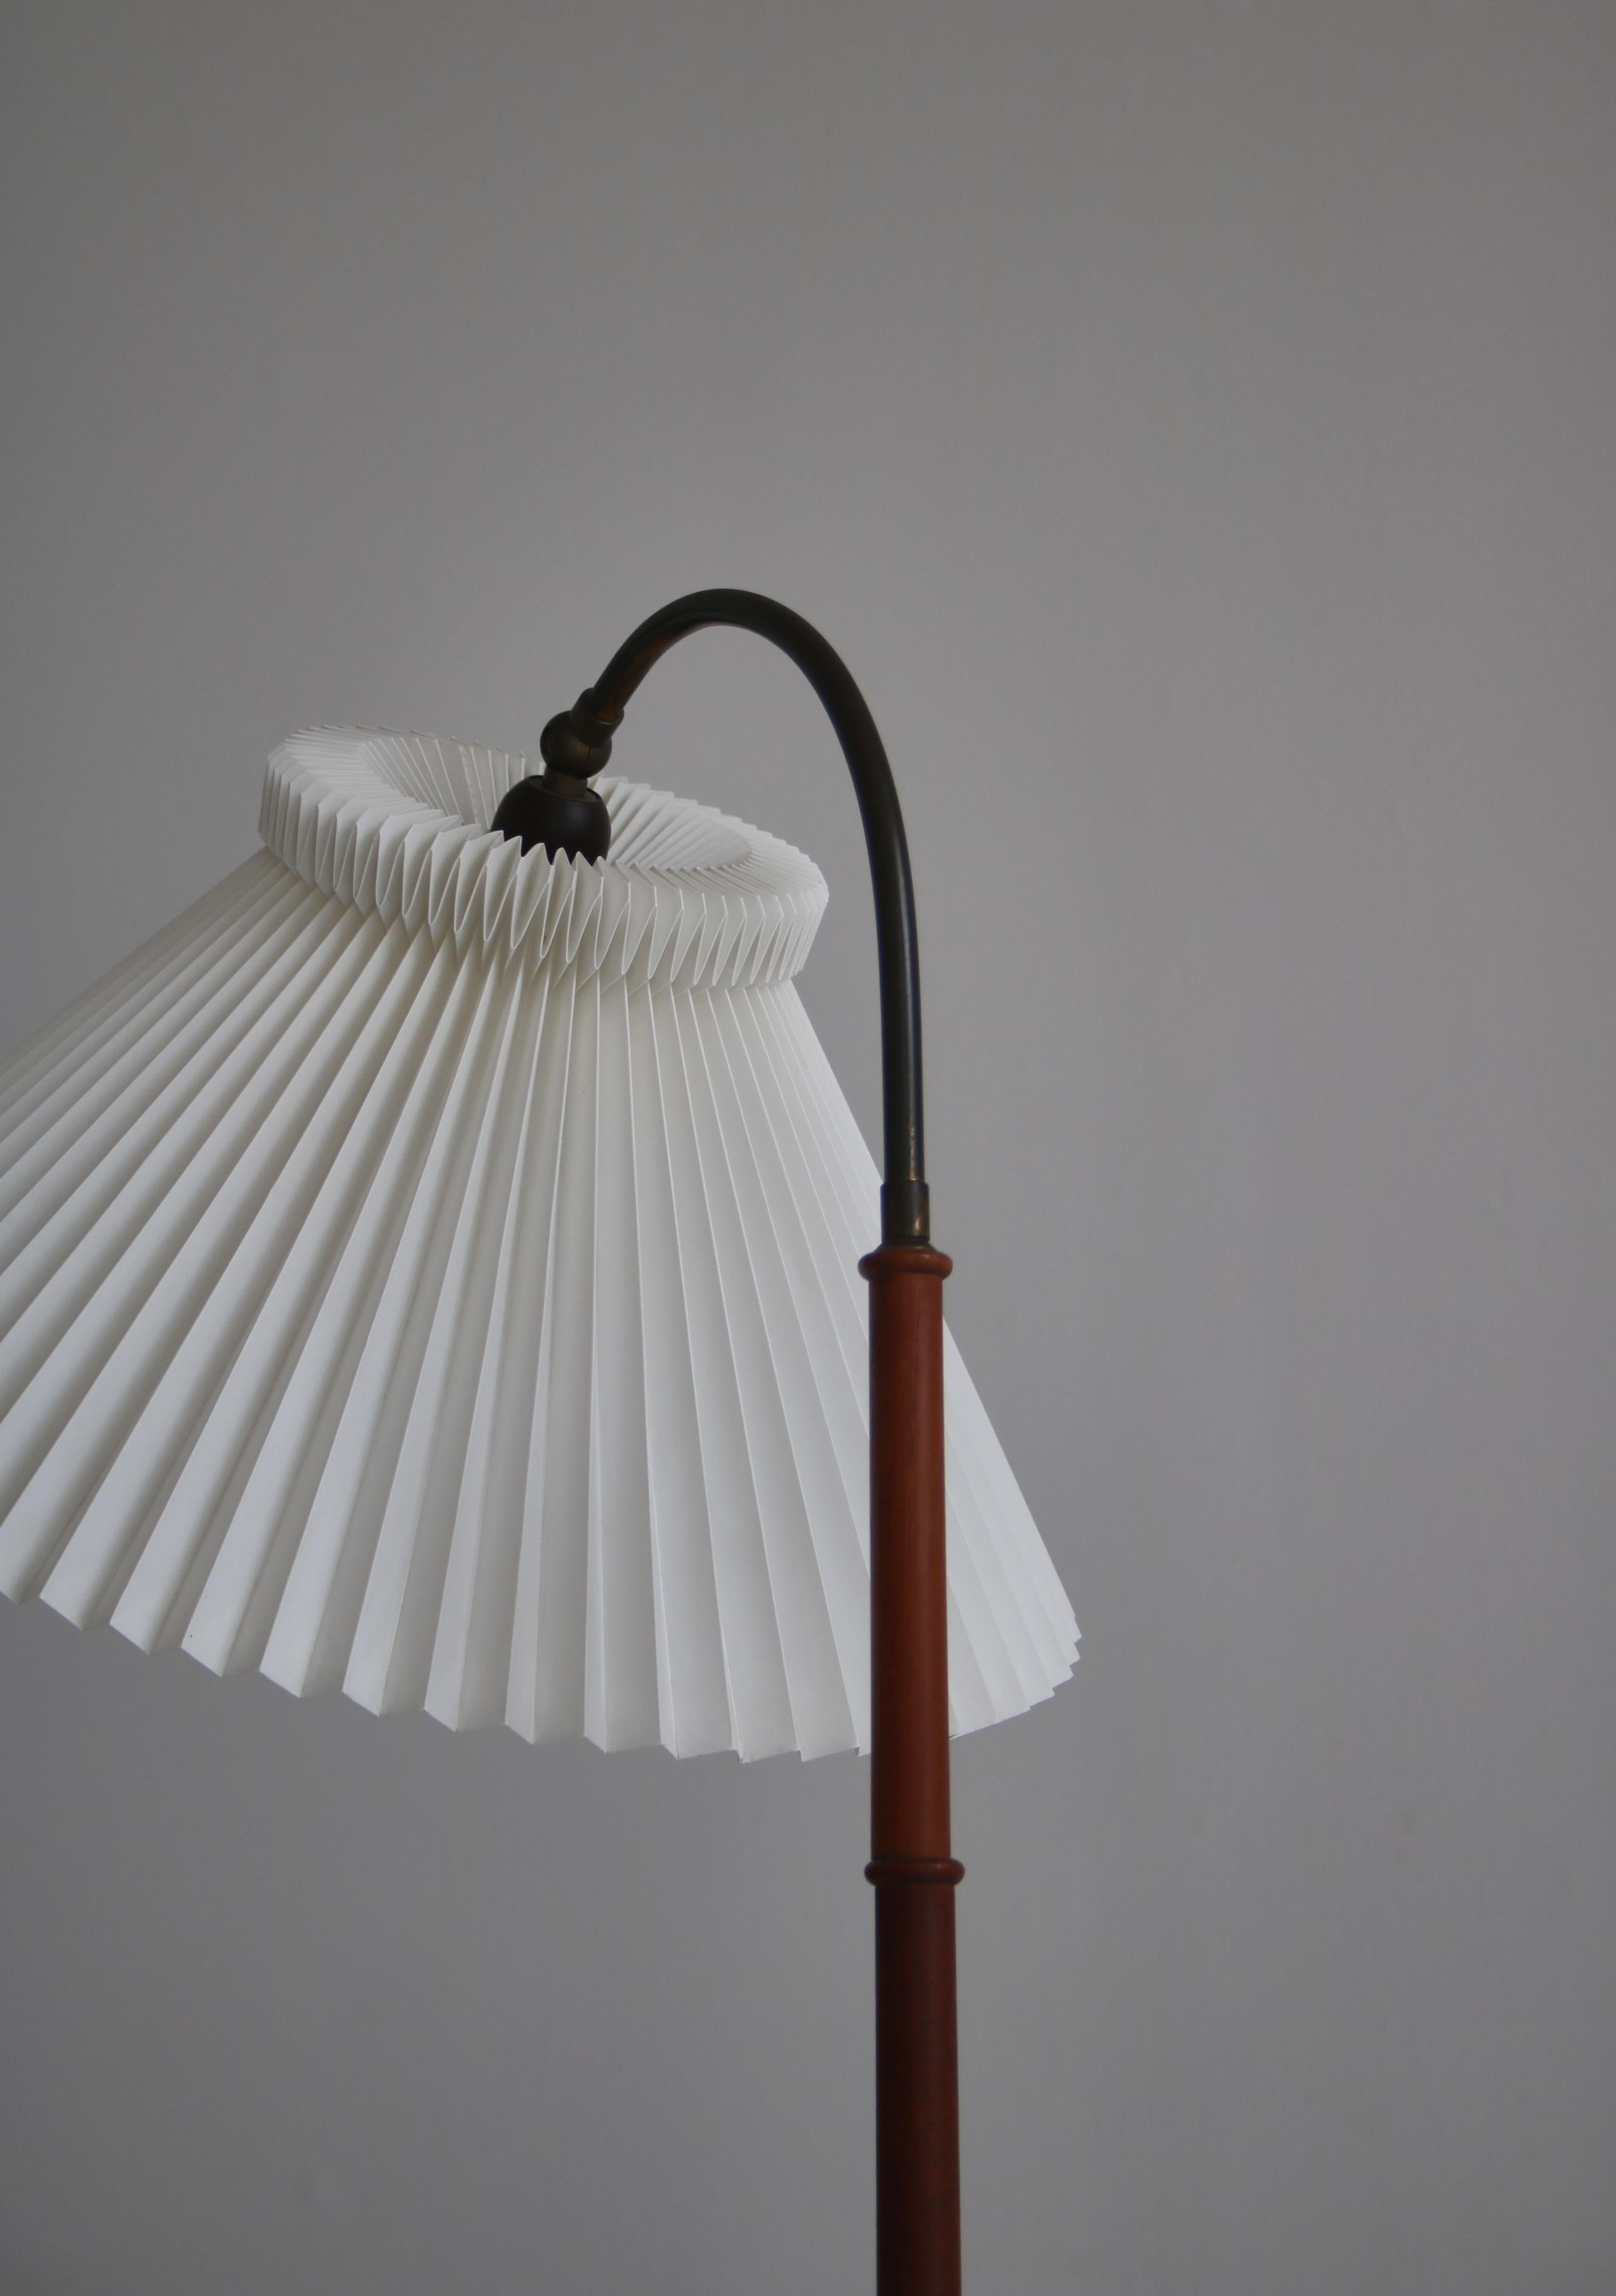 Danish Modern Floor Lamp in Teak with Hand Folded Le Klint Shade, 1950s For Sale 7